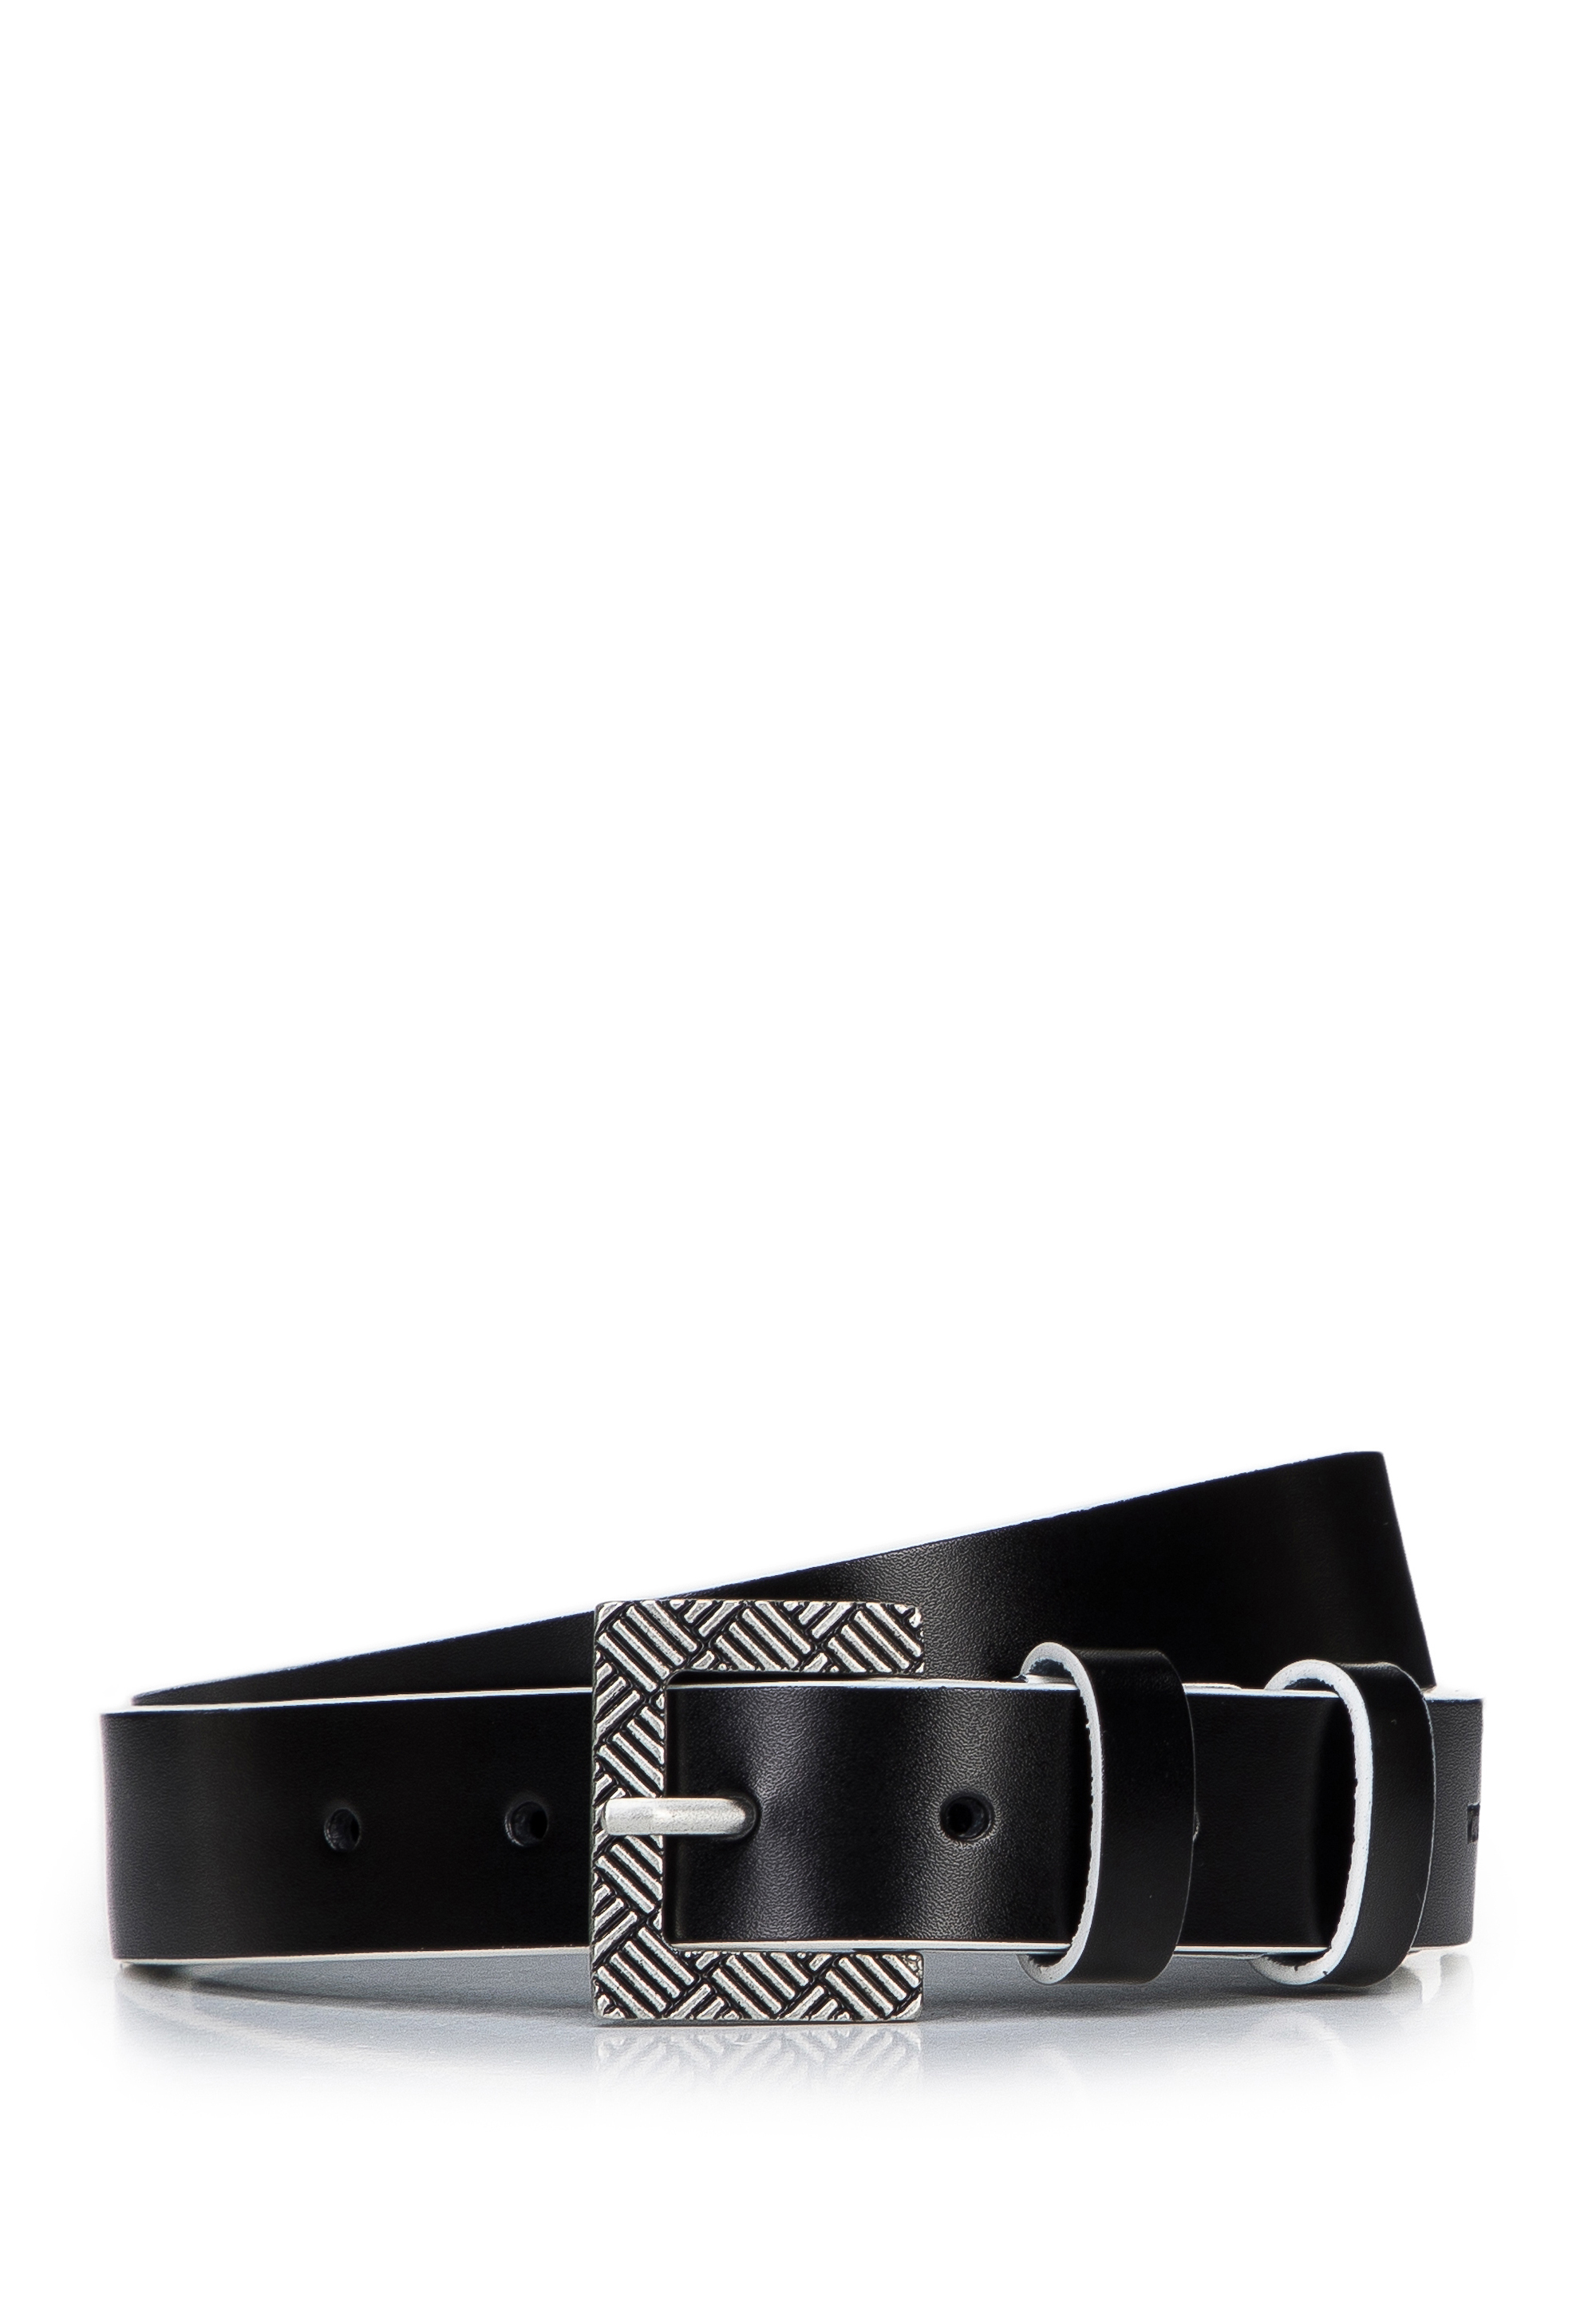 Ремень Wittchen Leather belt, черный